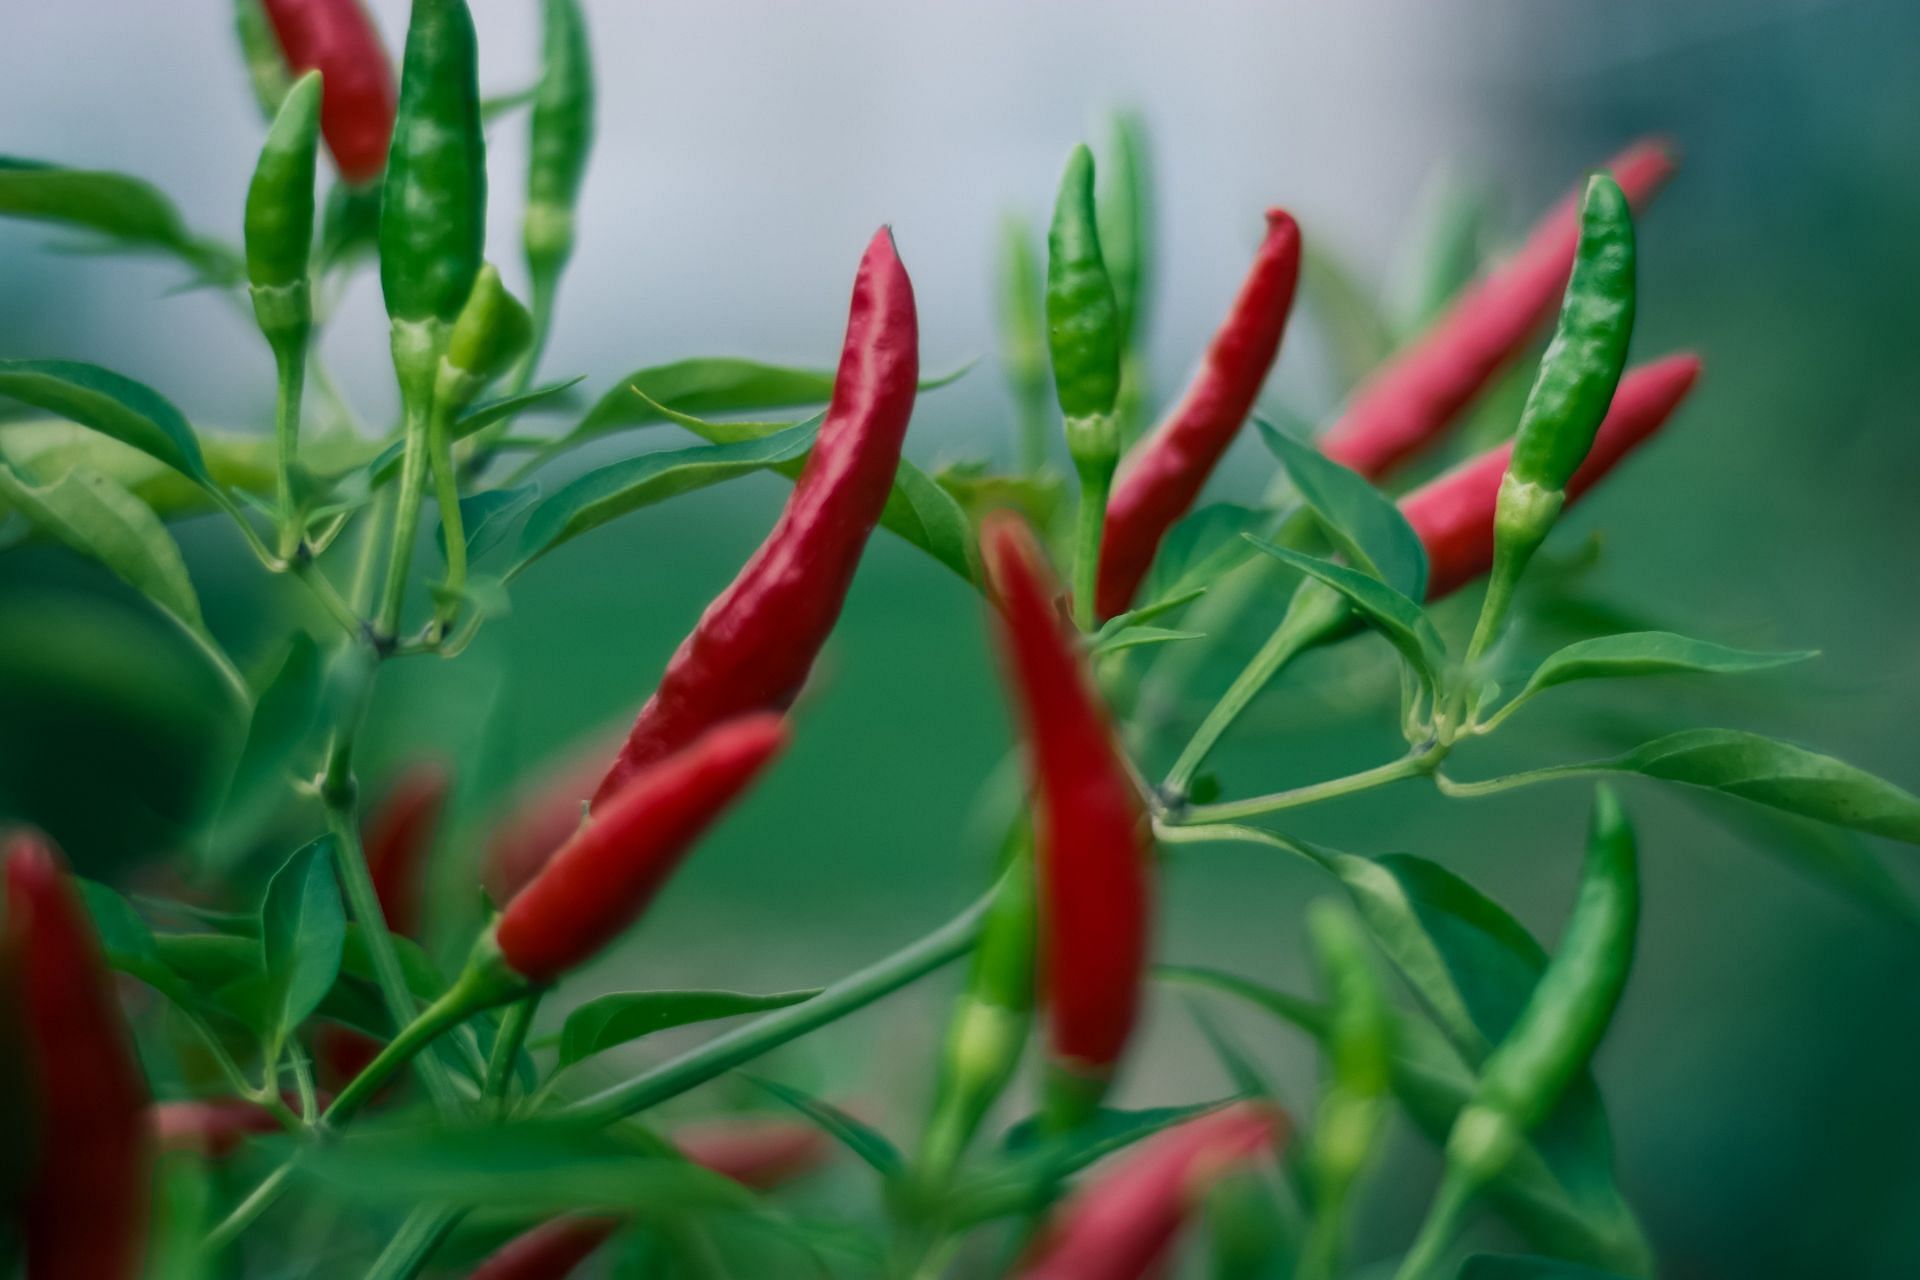 Cayenne pepper improves blood circulation. (Image via Unsplash/Steve Johnson)